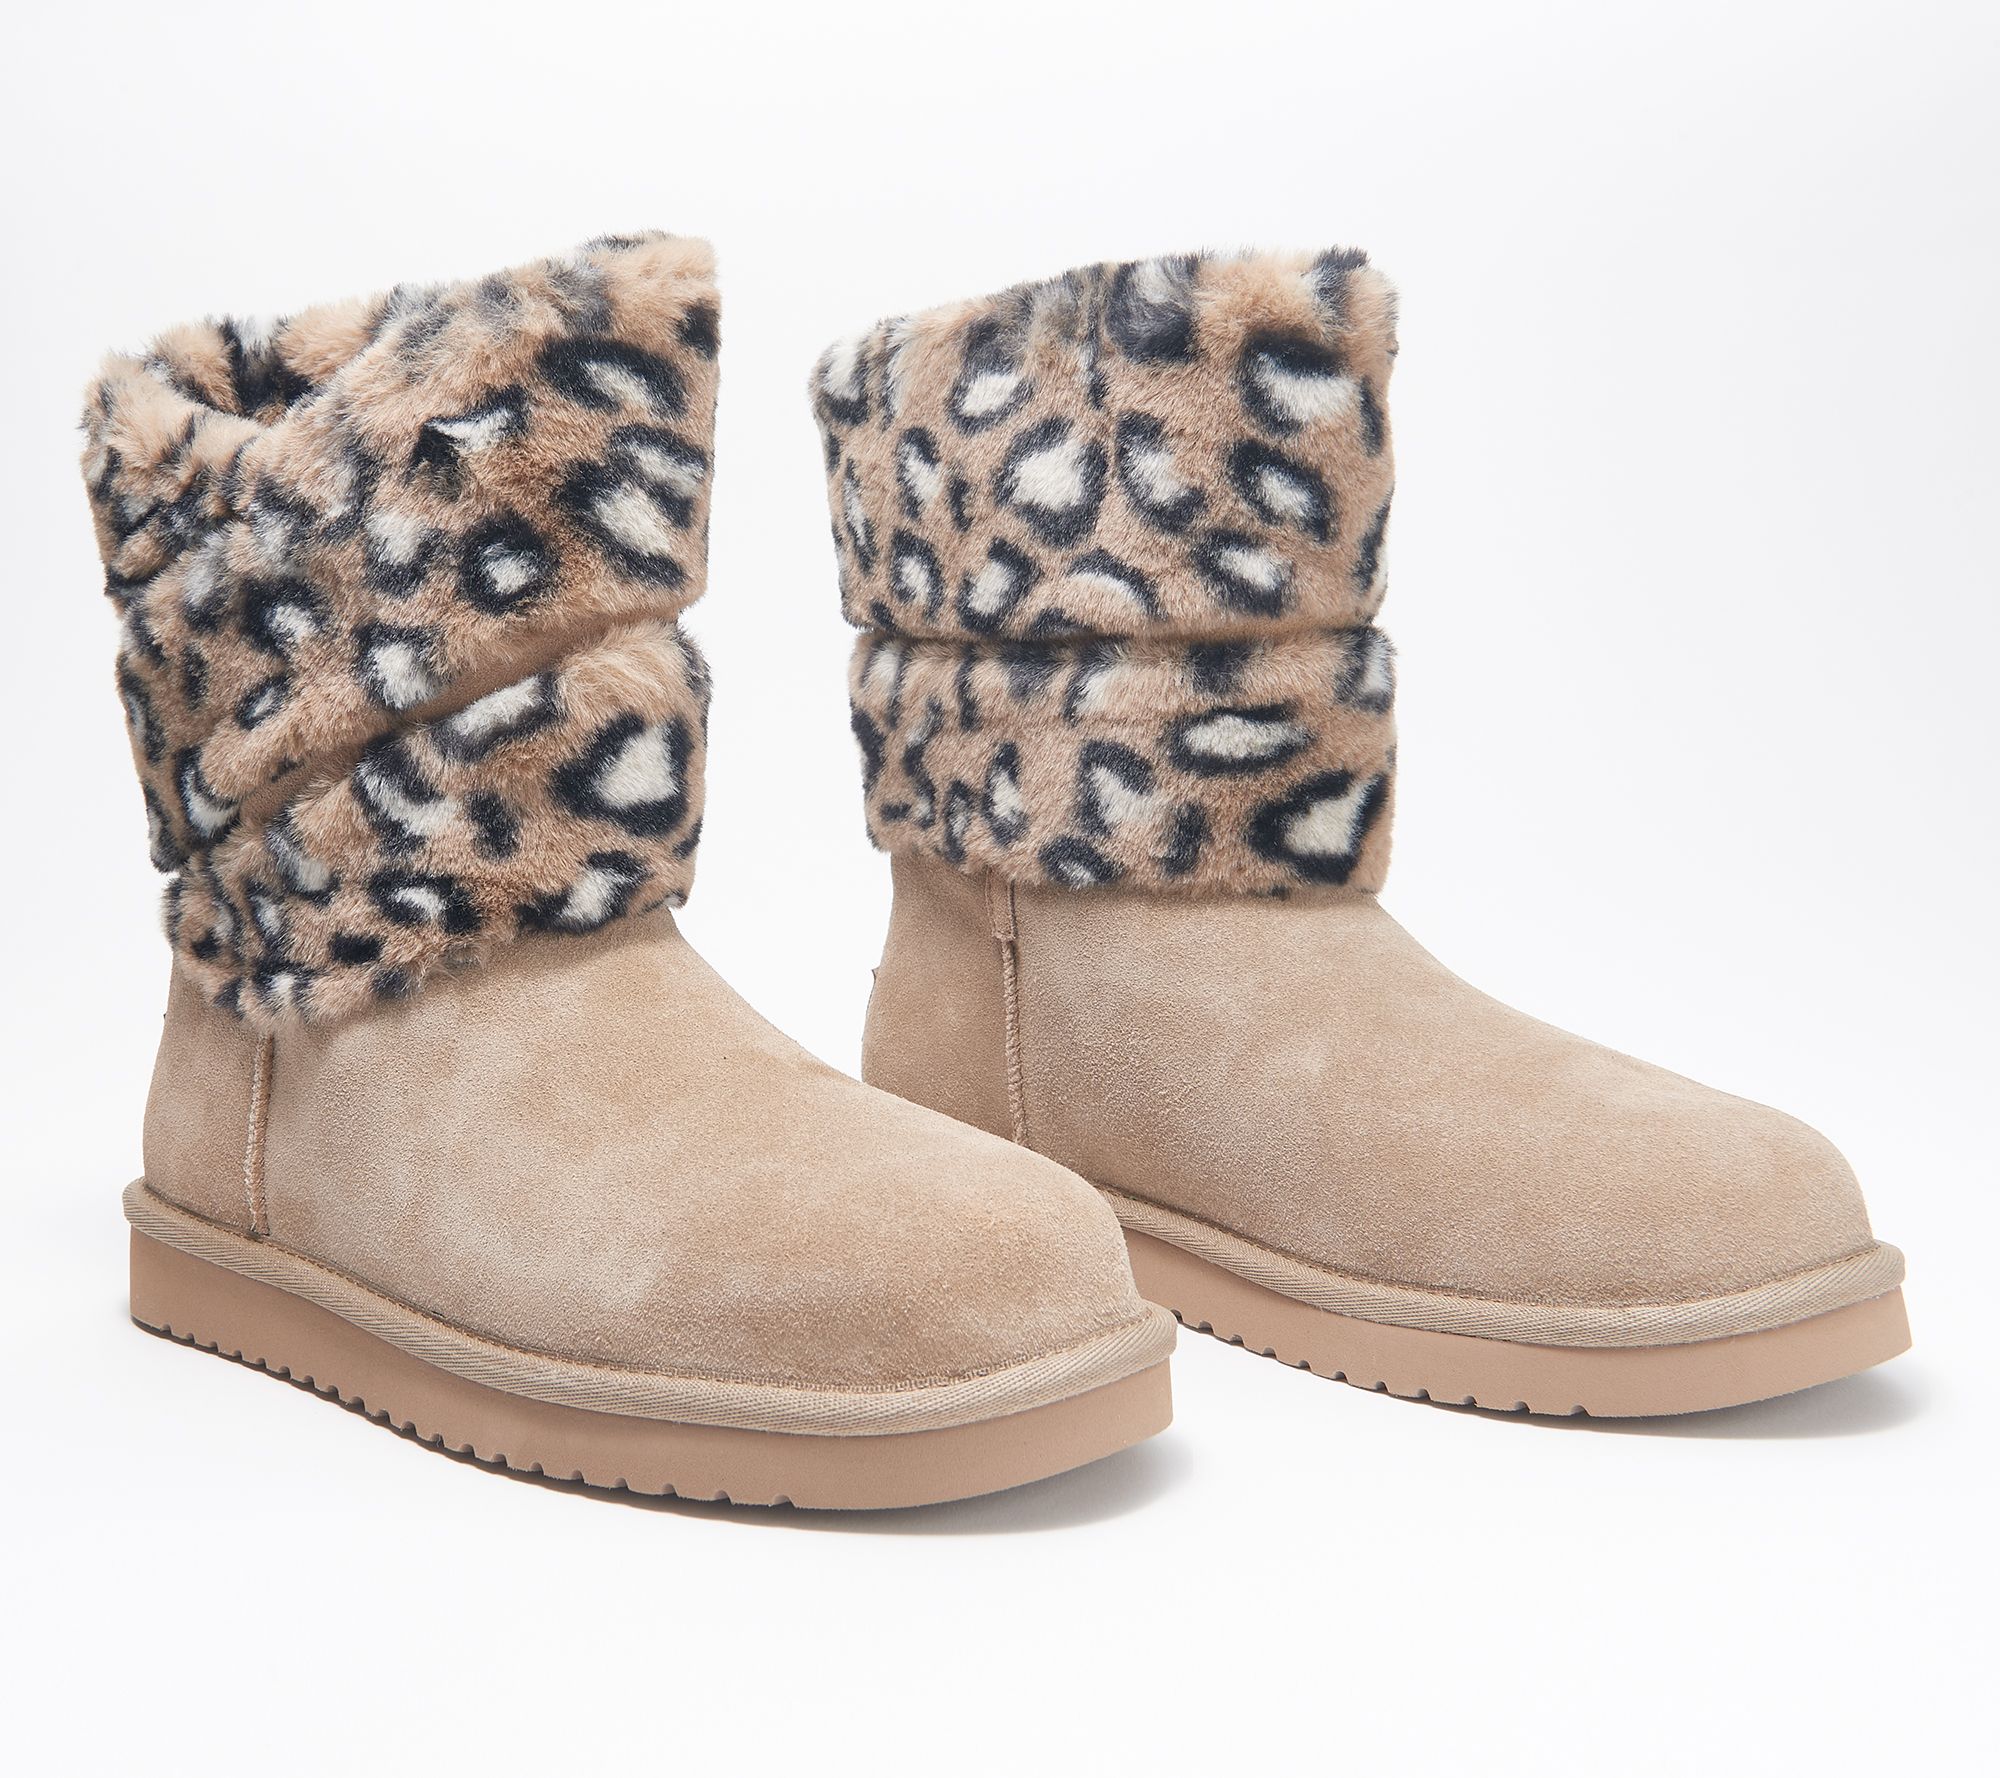 Ugg leopard boots, like new